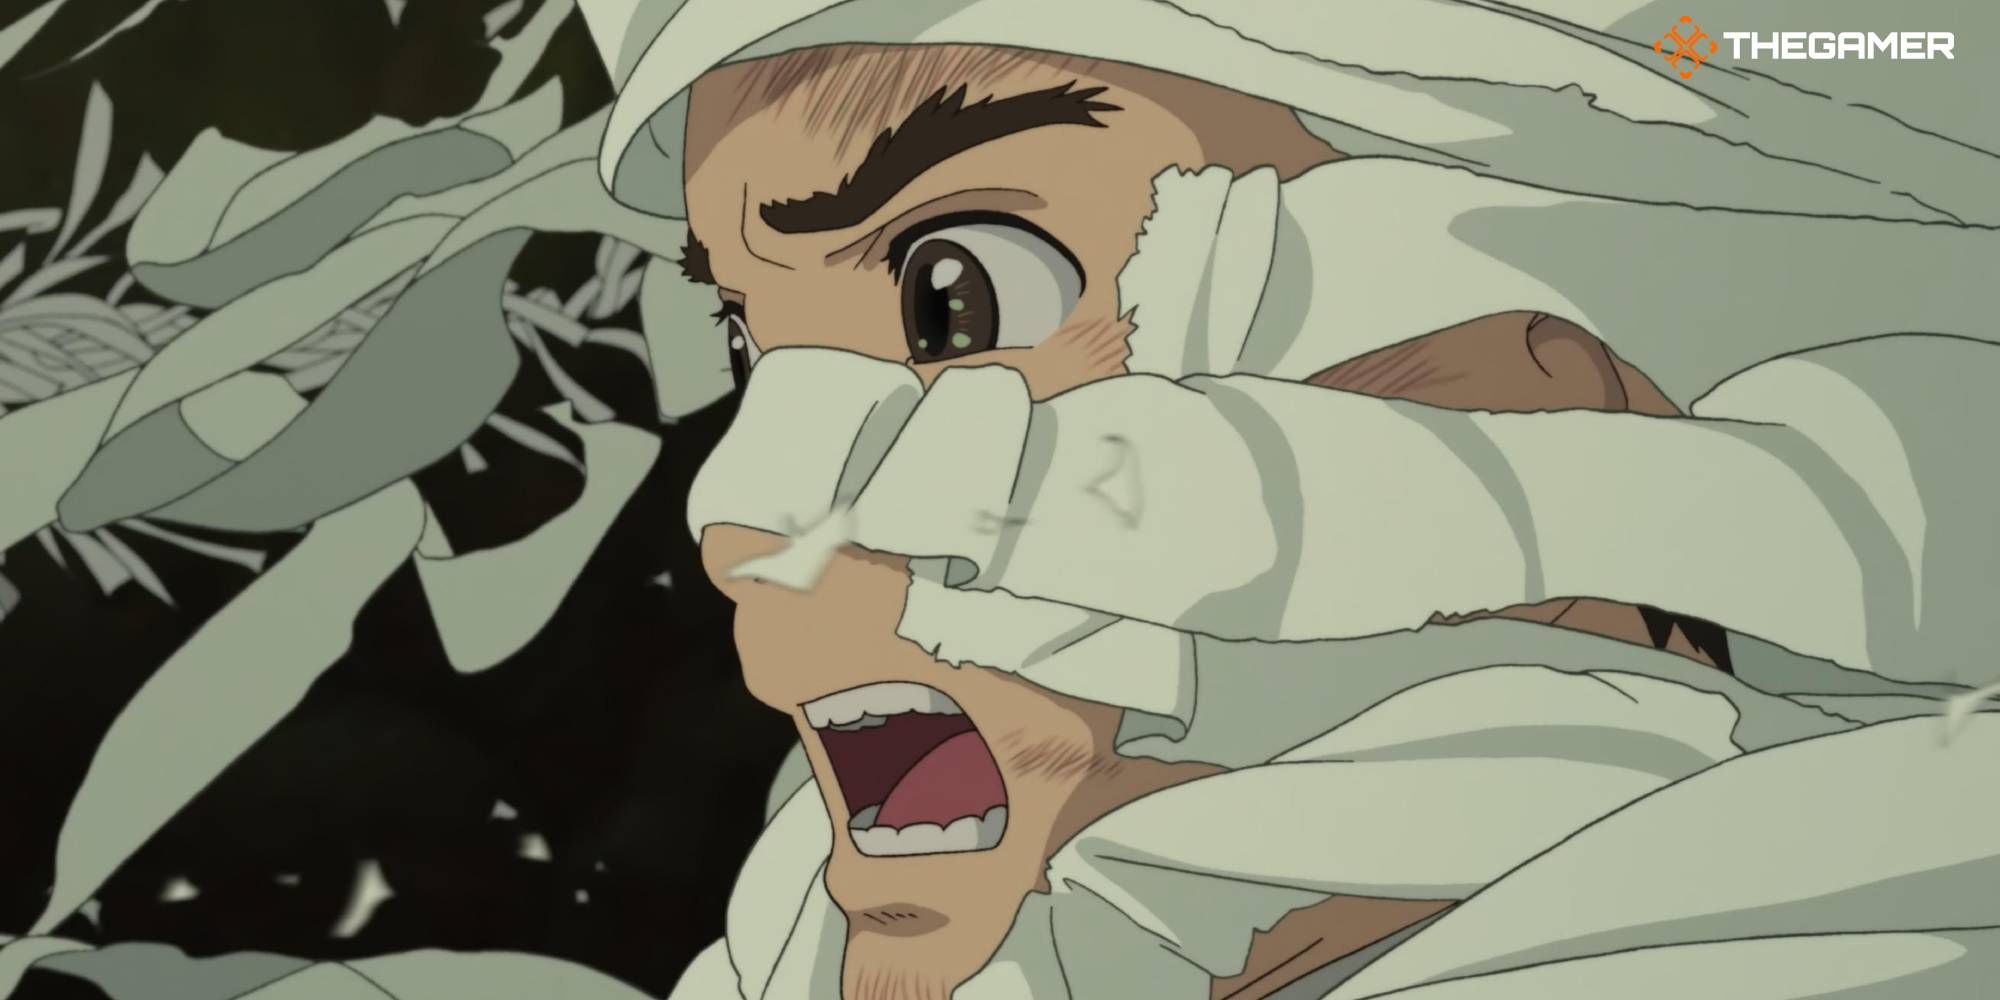 Mahito yells through paper bandages covering his face.